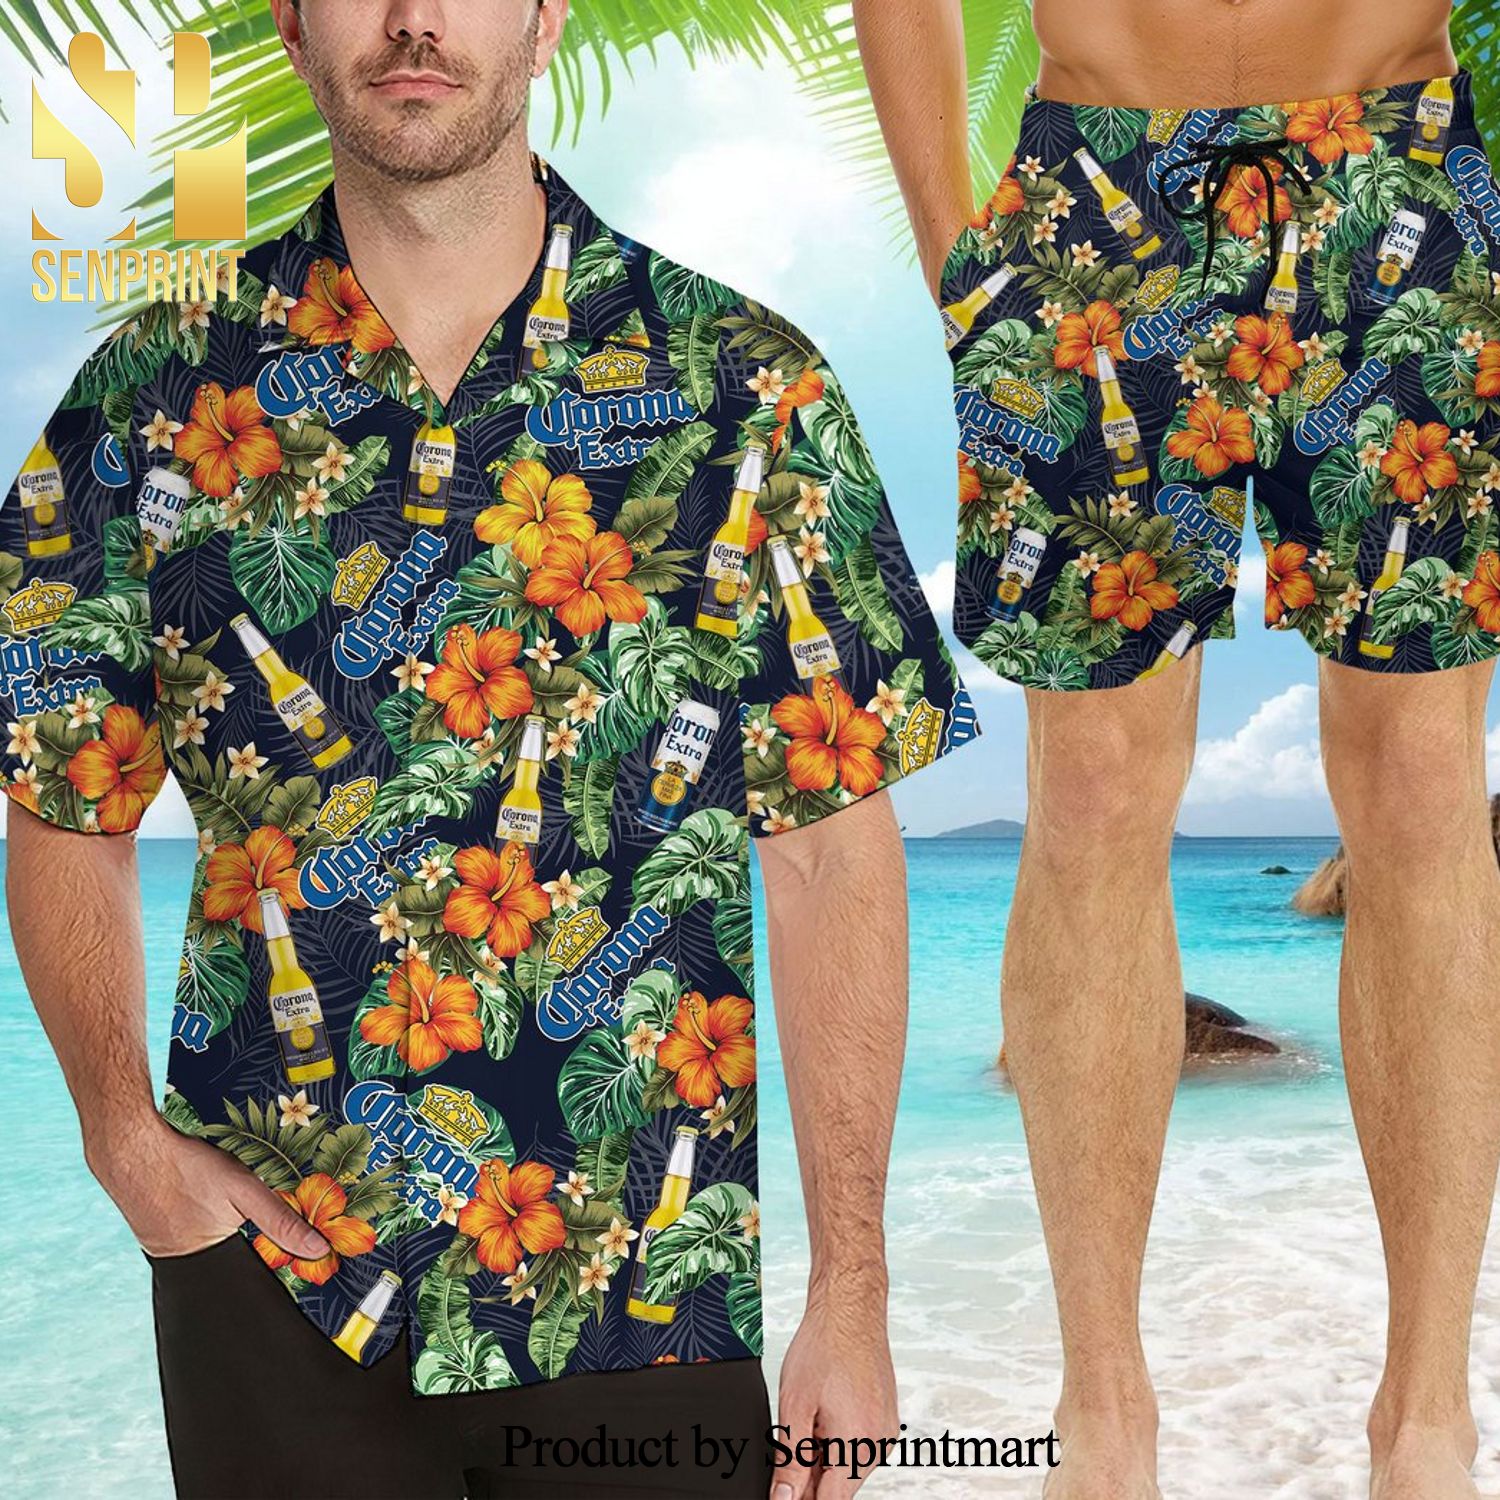 Corona Extra Beer Full Printing Flowery Aloha Summer Beach Hawaiian Shirt And Beach Shorts